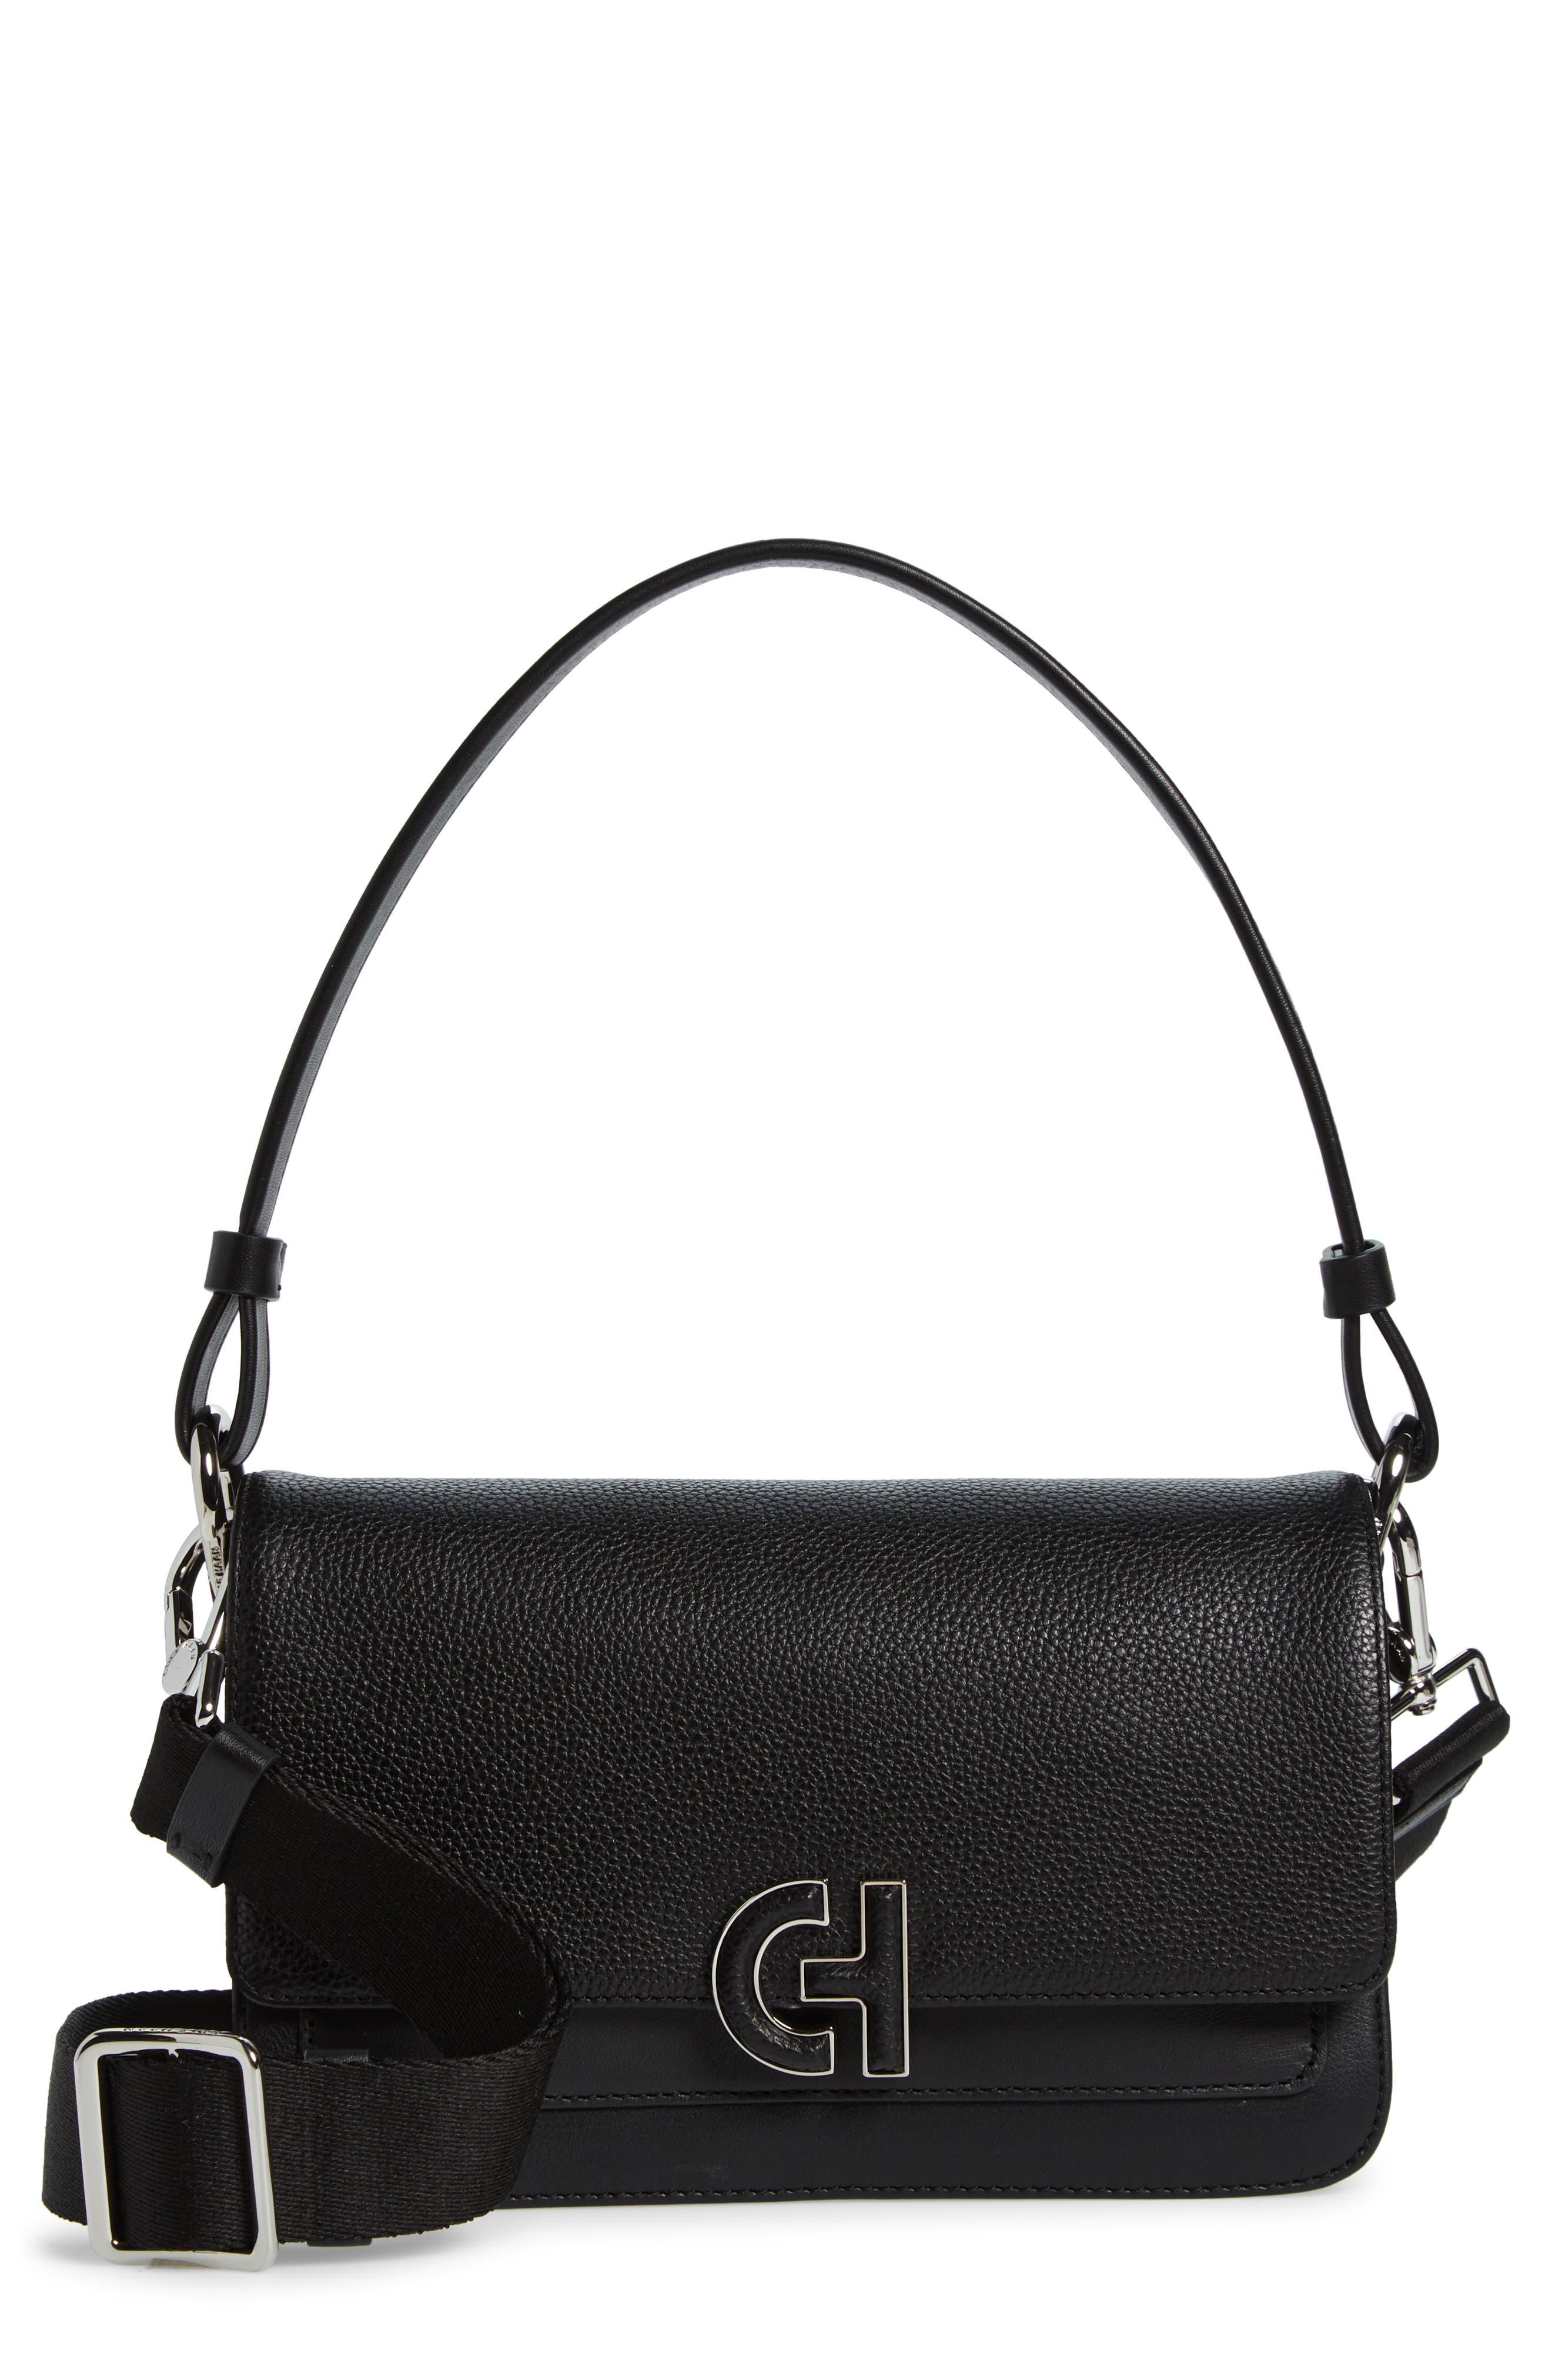 Cole Haan Mini Leather Shoulder Bag in Black | Lyst